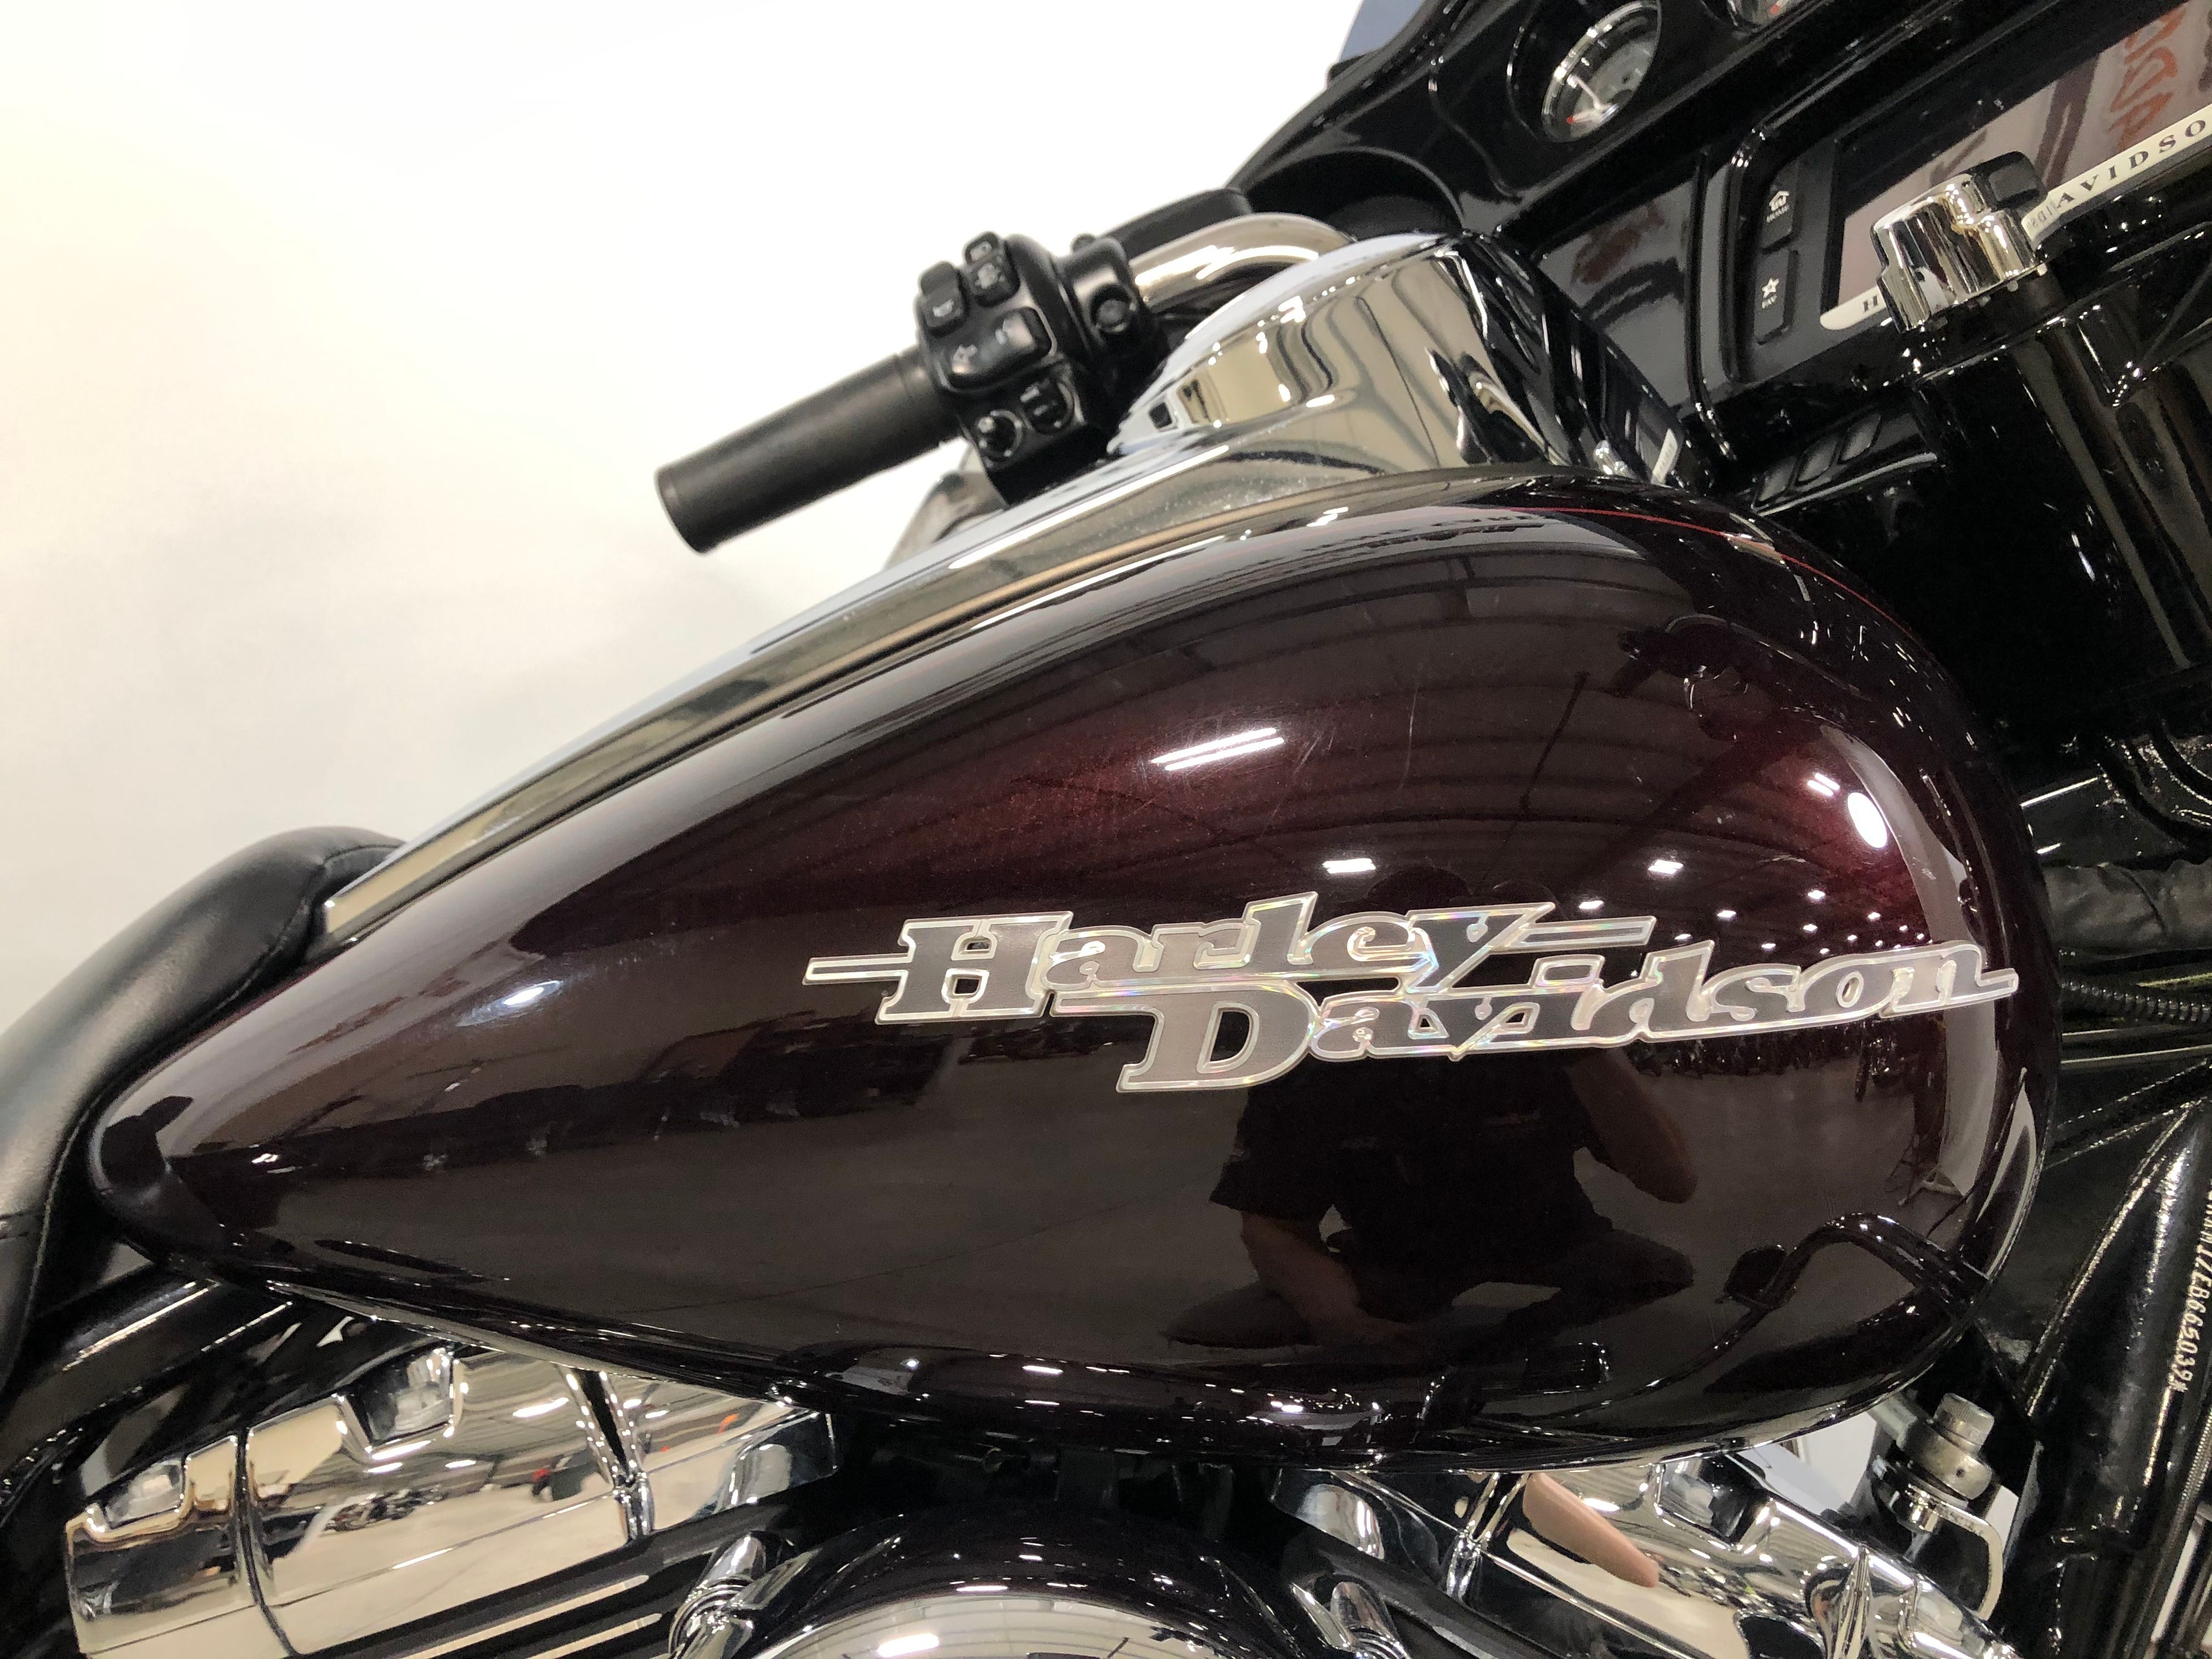 Pre-Owned 2014 Harley-Davidson Street Glide Special FLHXS